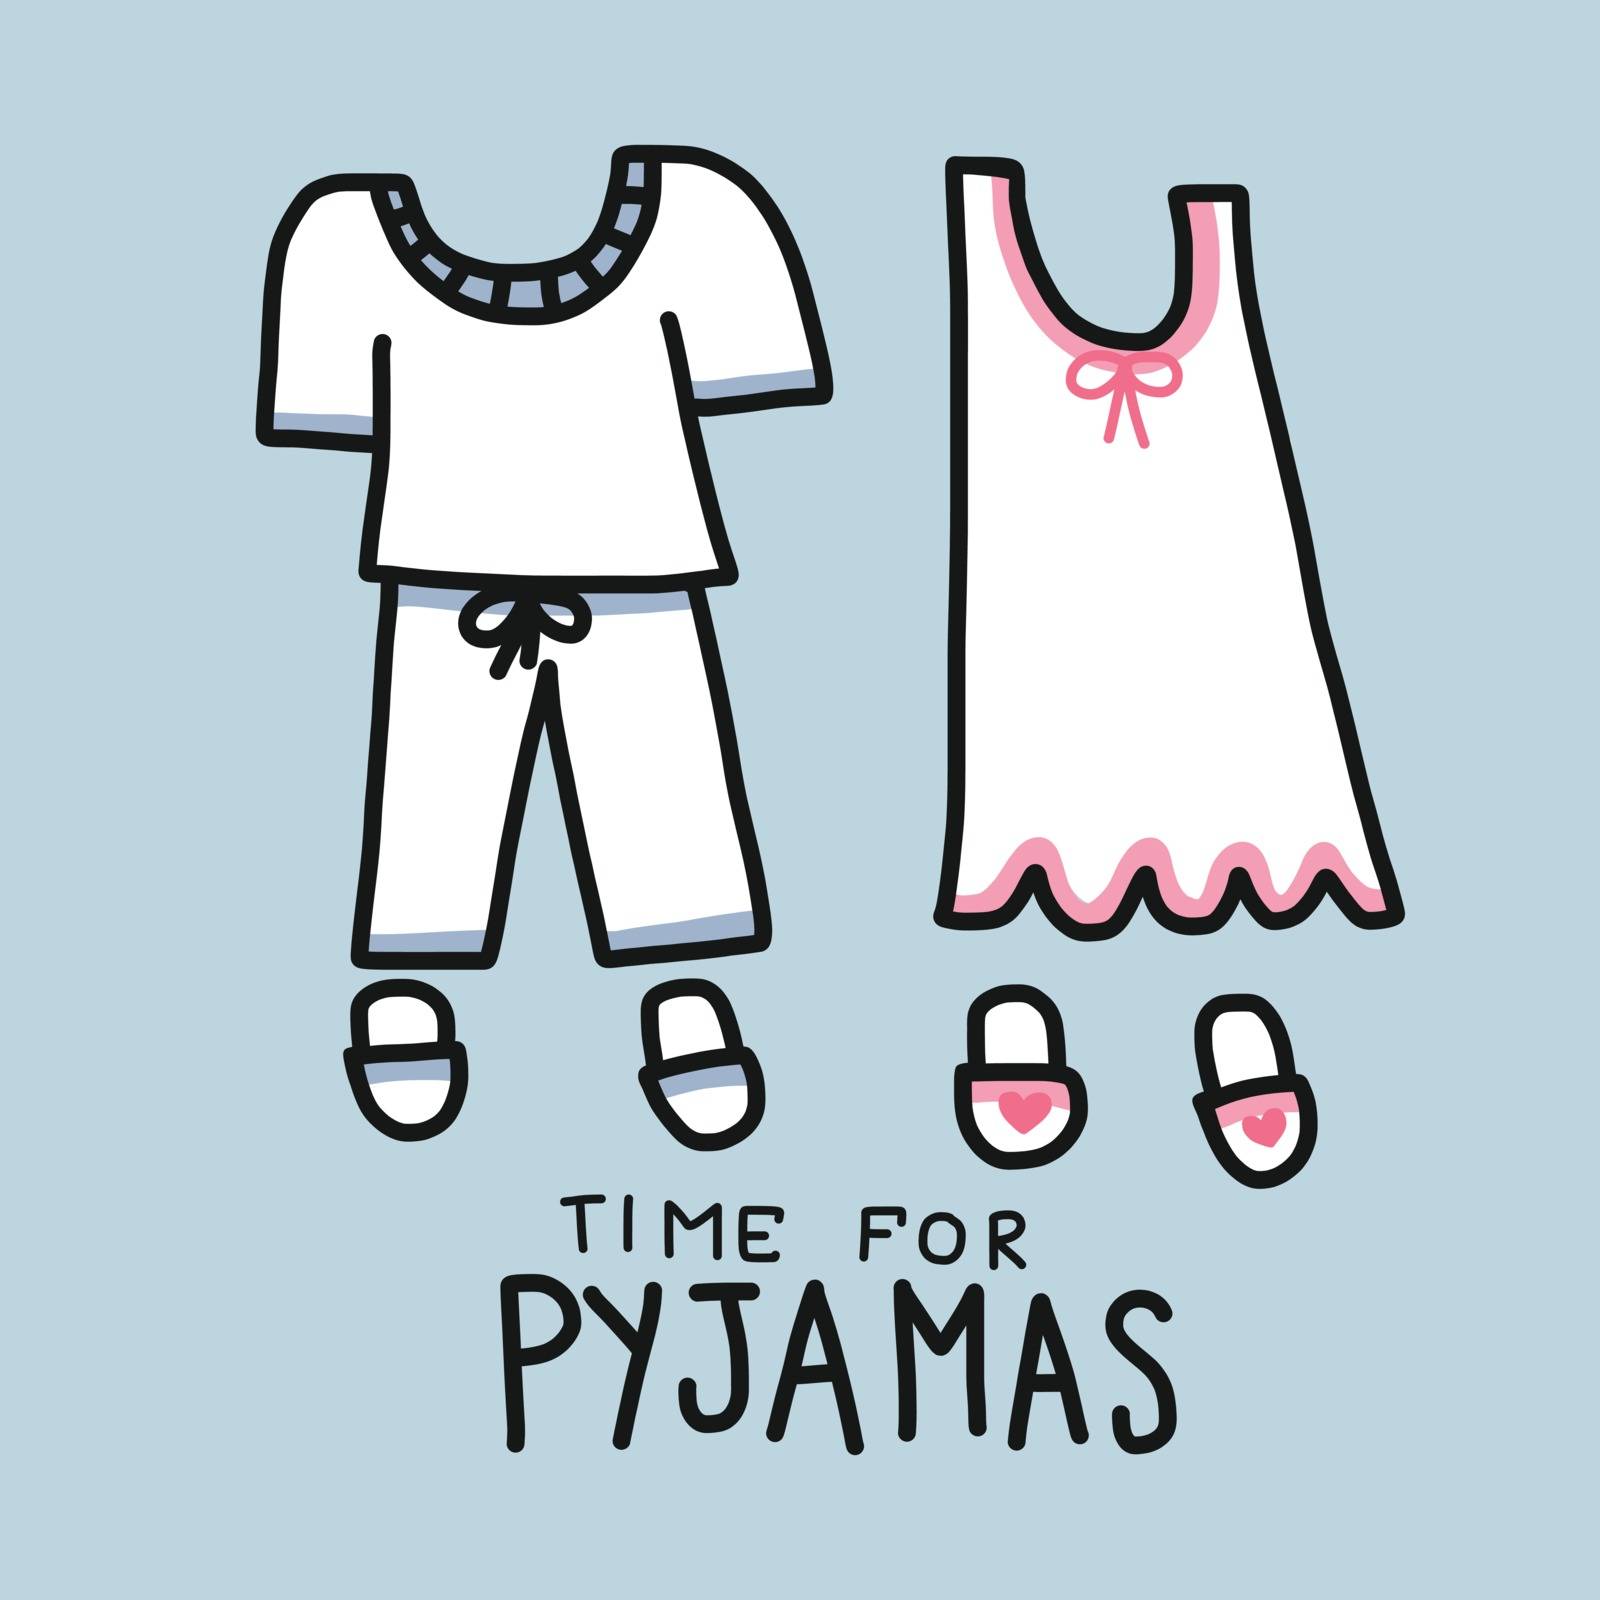 Time for Pyjamas (Pajamas) word and cartoon vector illustration by Yoopho